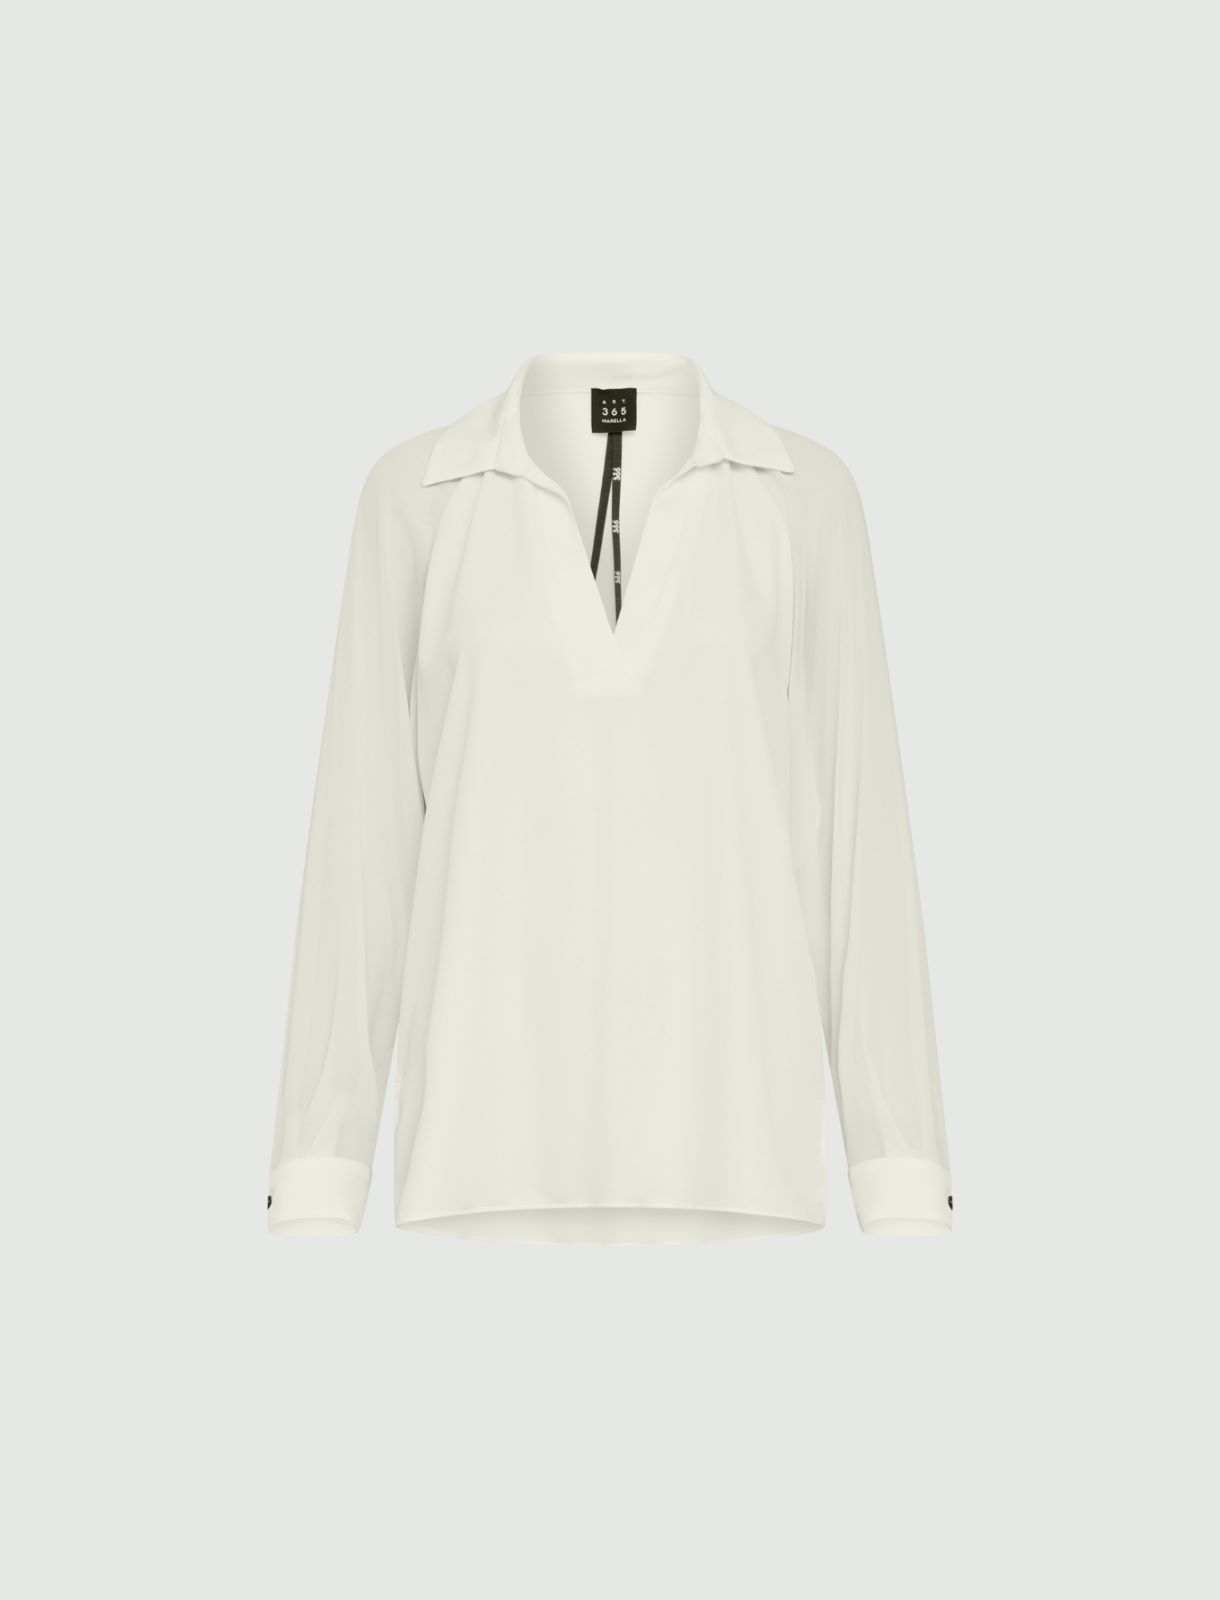 Satin blouse - Wool white - Marina Rinaldi - 5